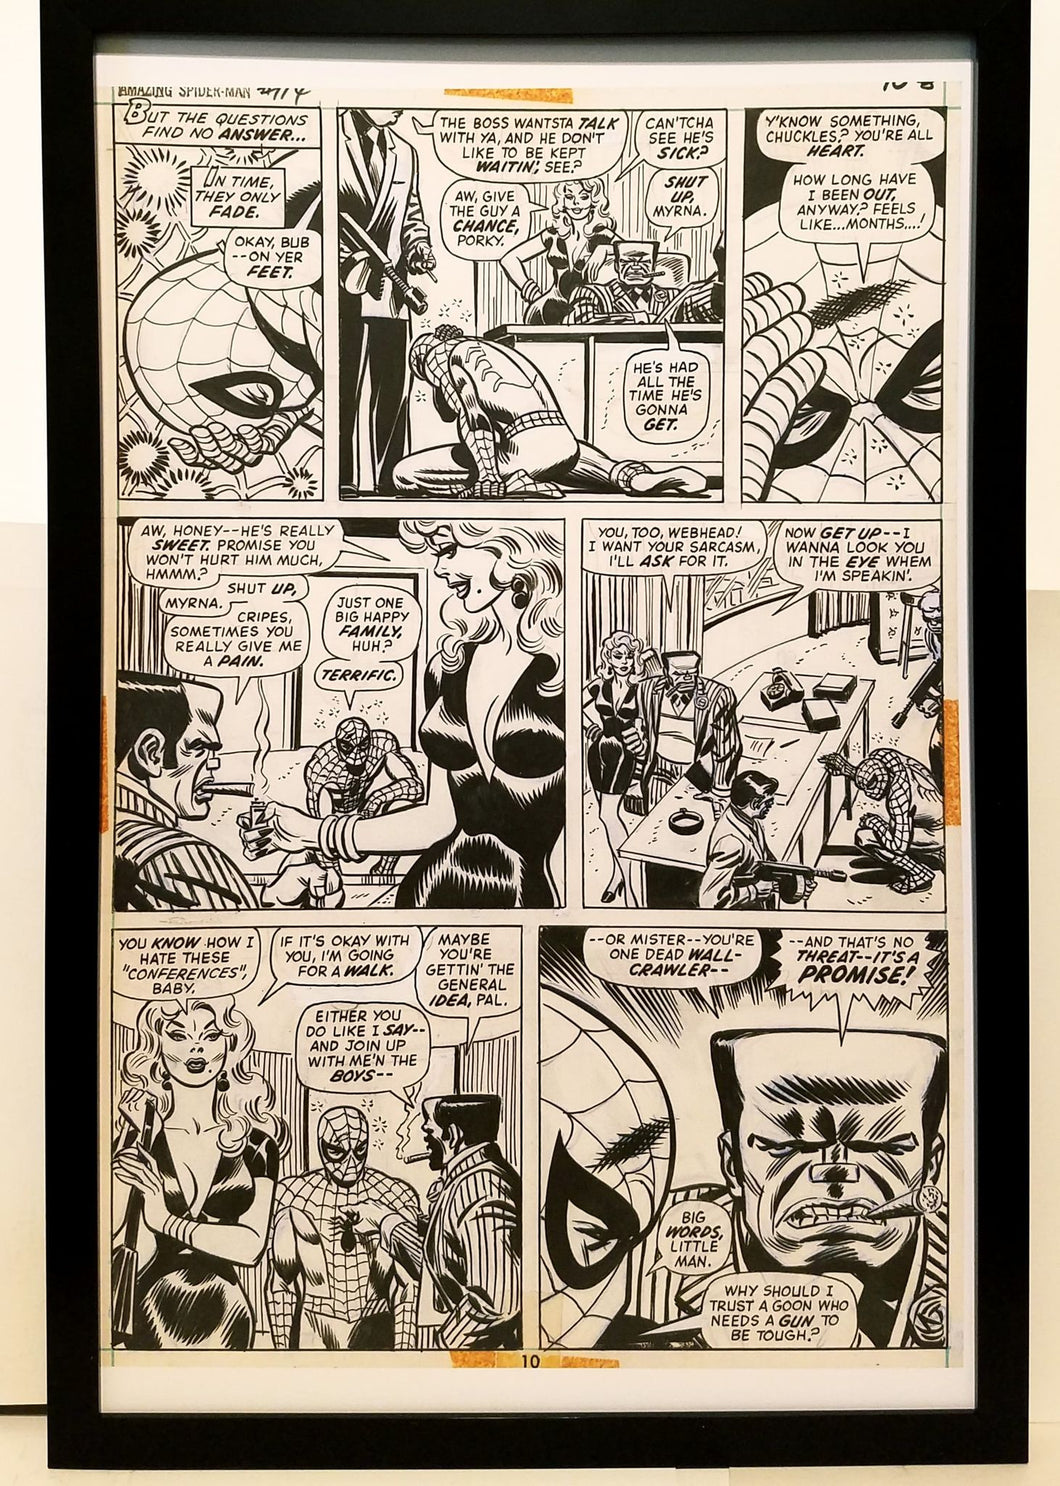 Amazing Spider-Man #114 pg. 10 11x17 FRAMED Original Art Poster Marvel Comics